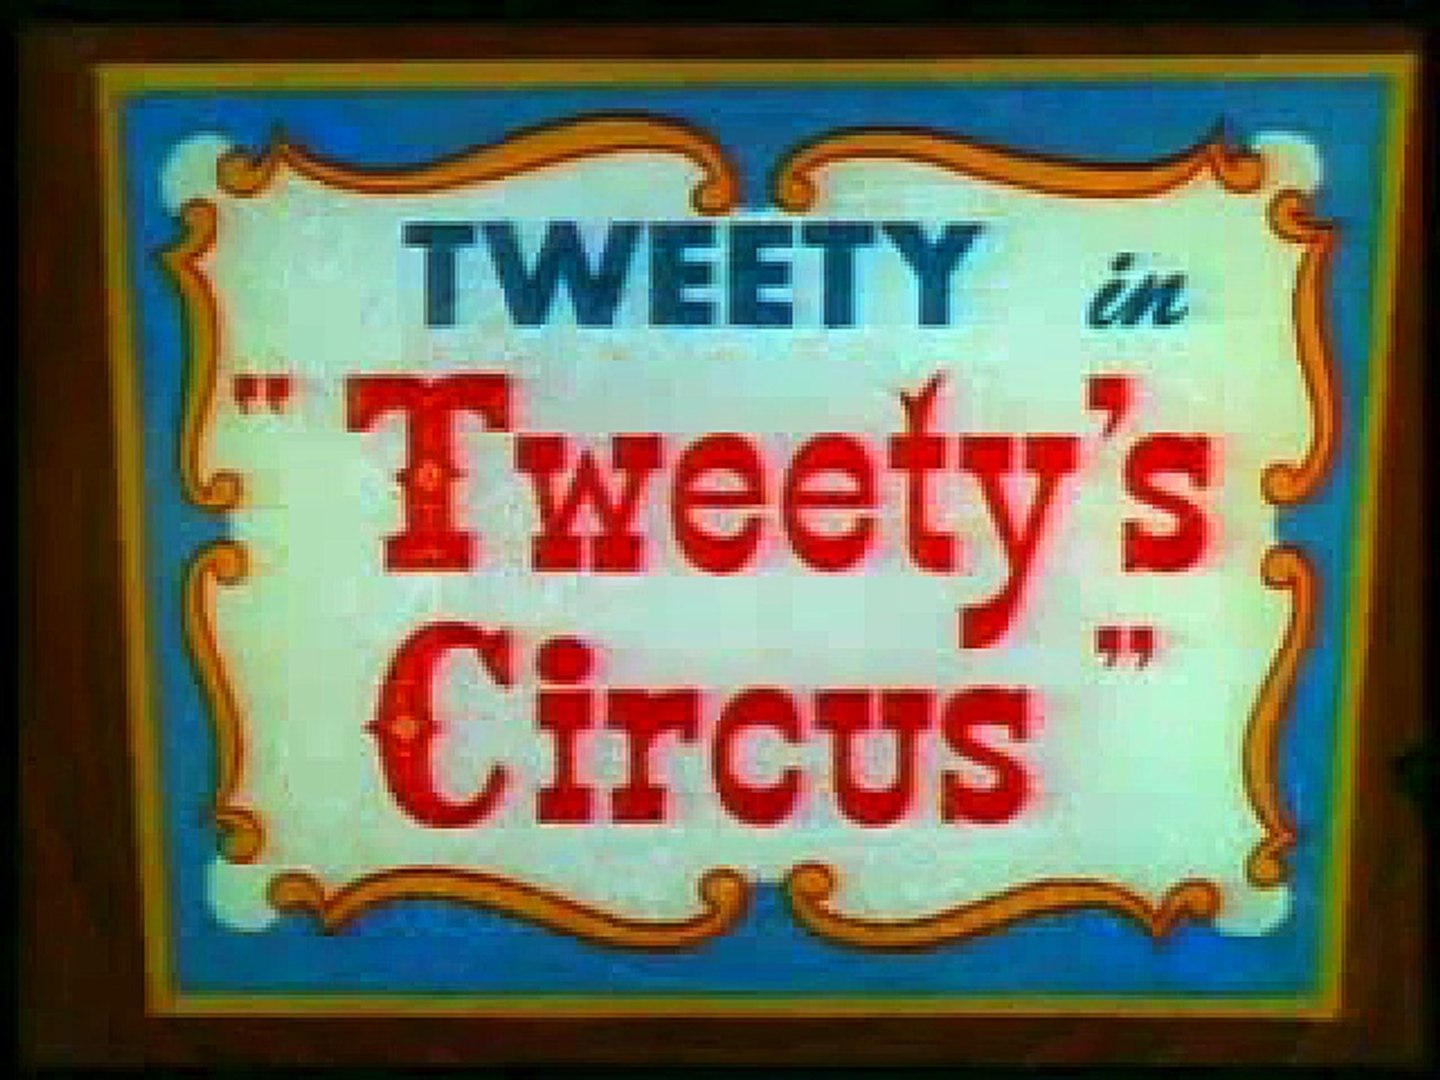 Tweety's Circus - video Dailymotion